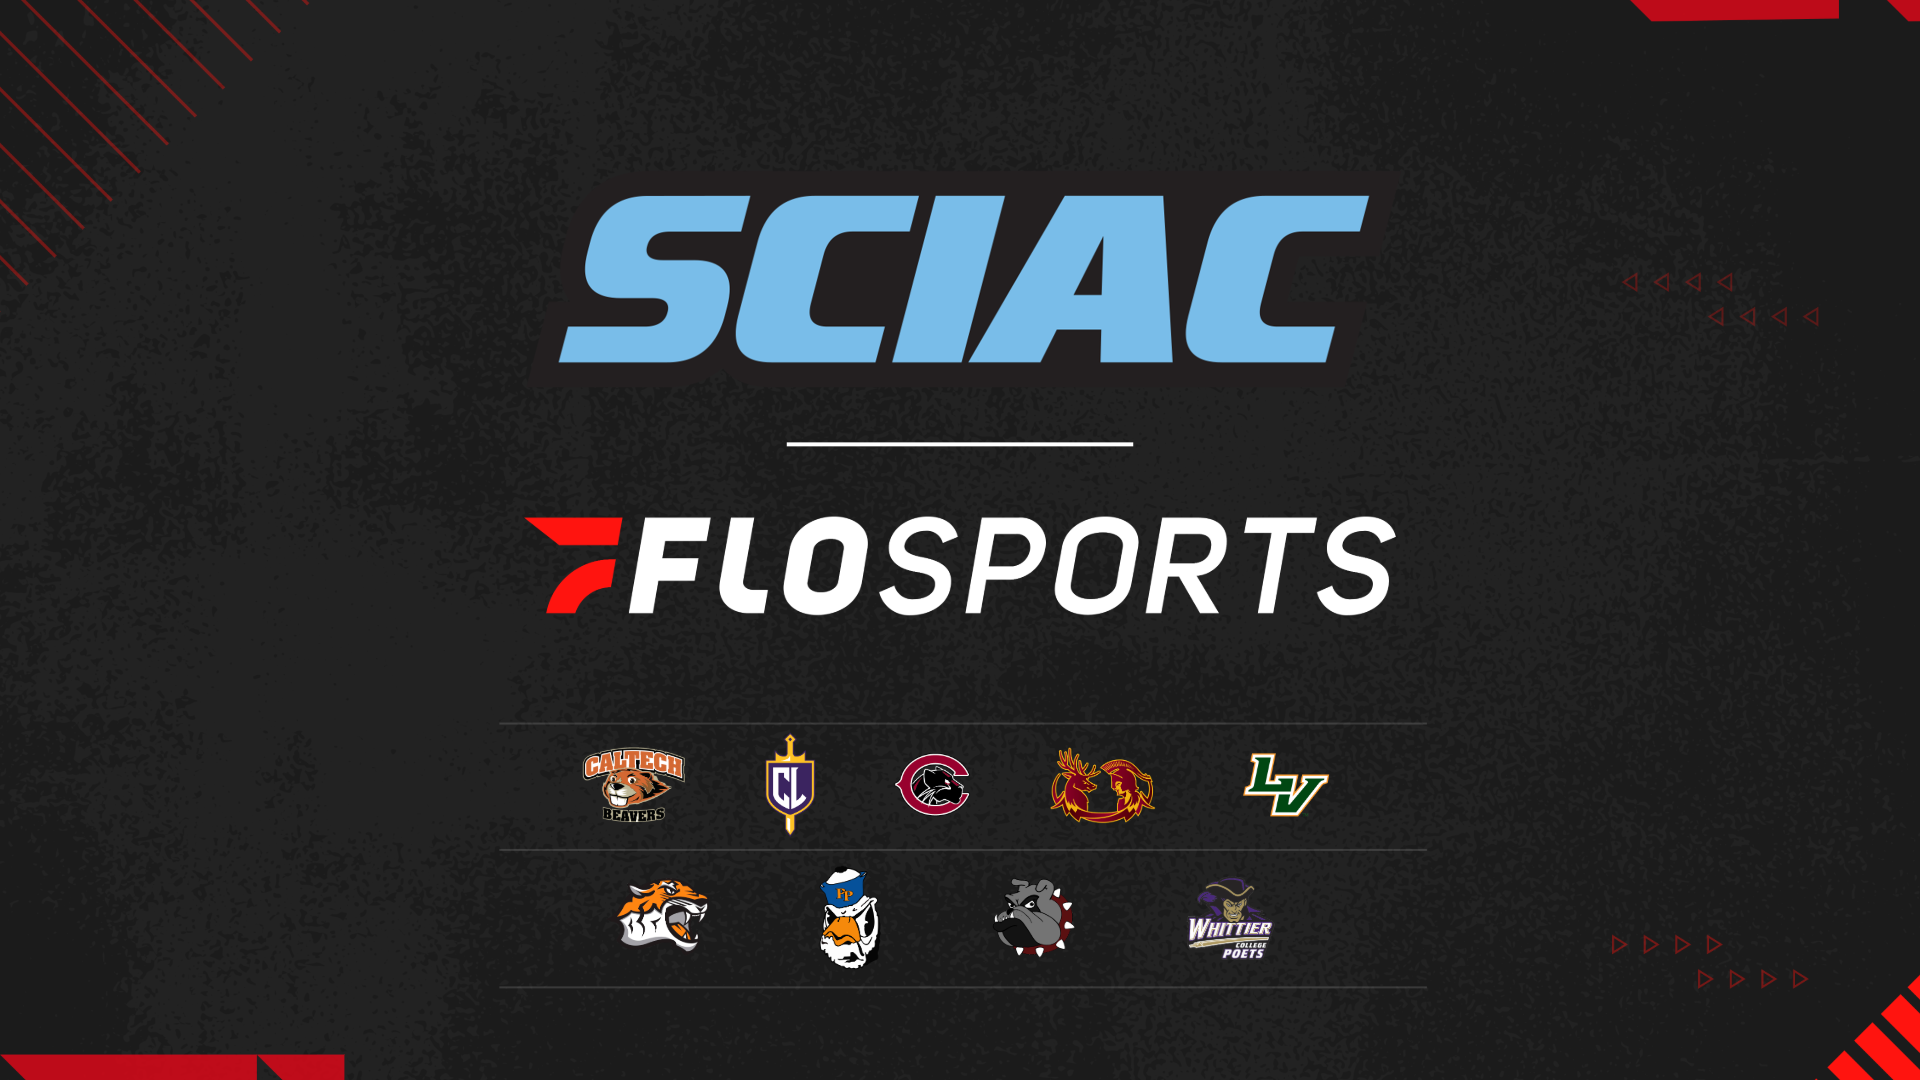 The SCIAC logo, the FloSports logo, and the nine SCIAC athletic team logos